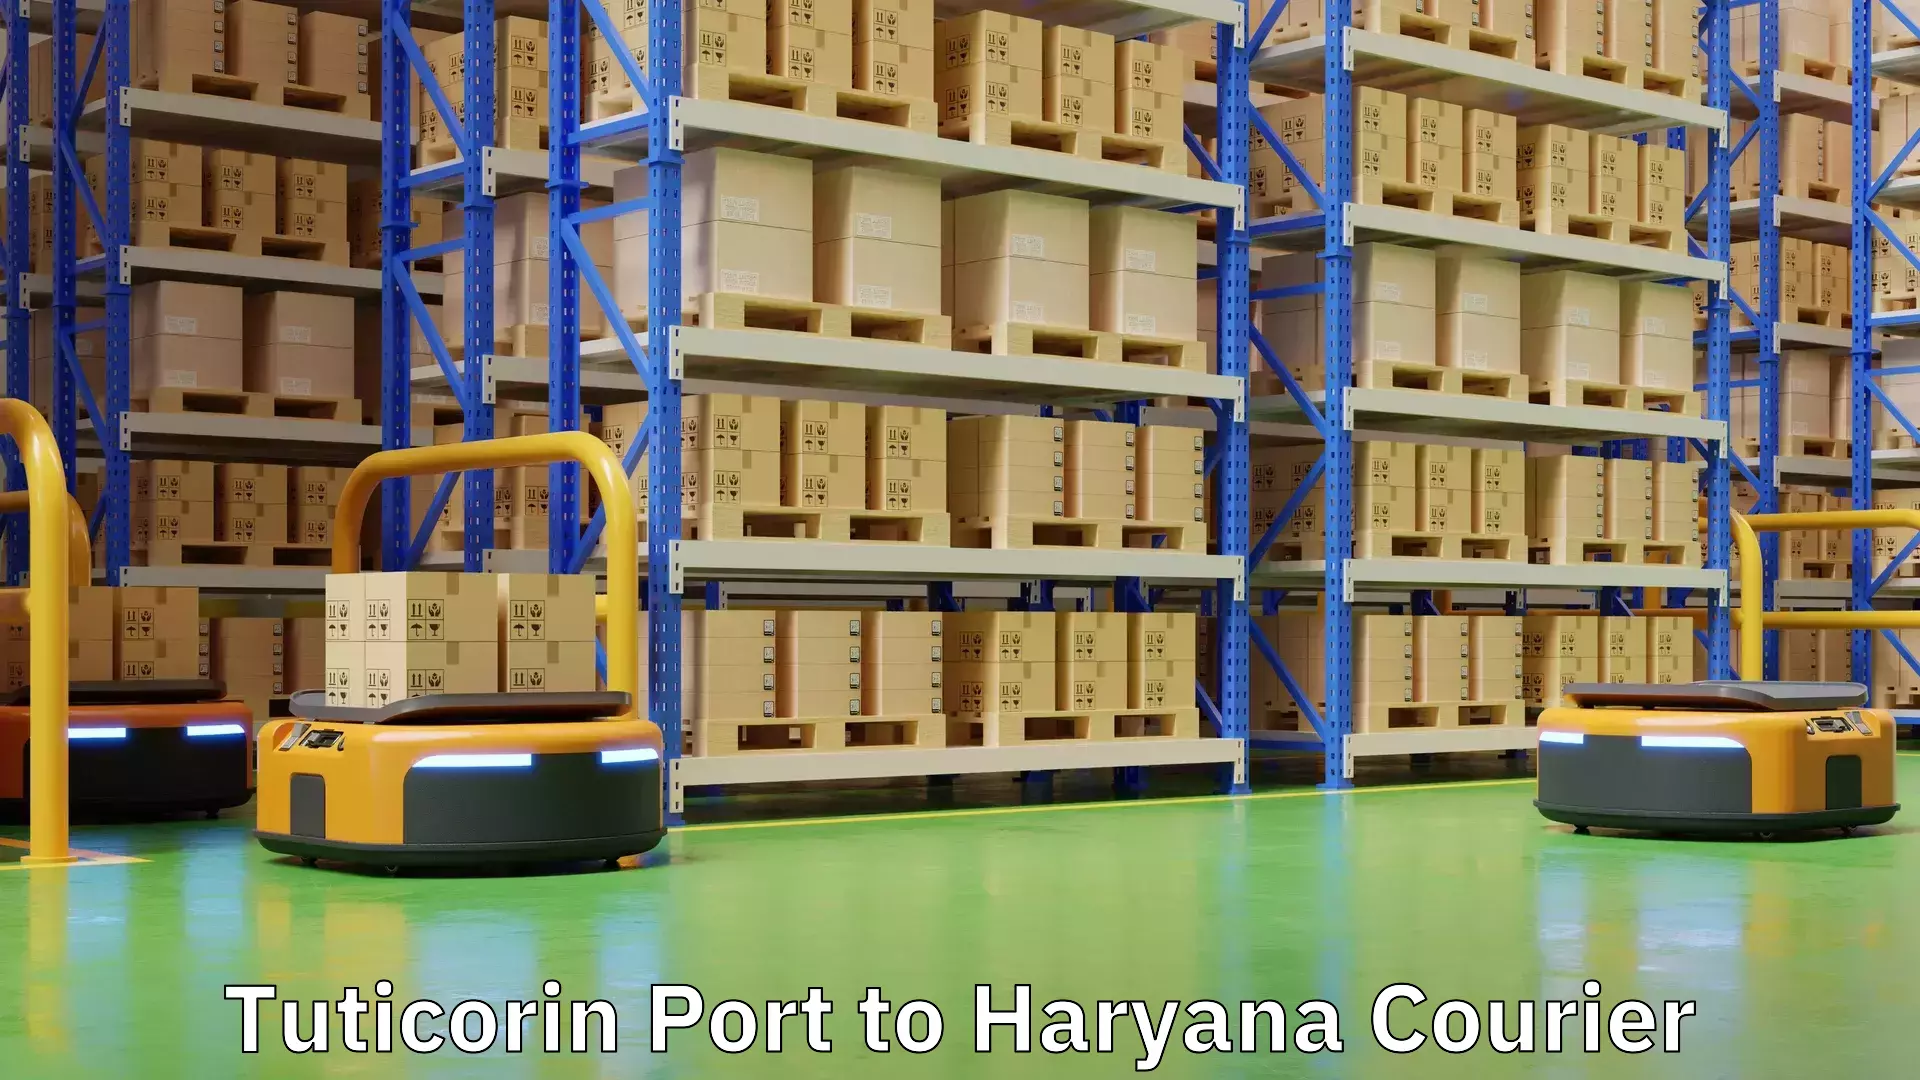 Express delivery capabilities Tuticorin Port to Haryana